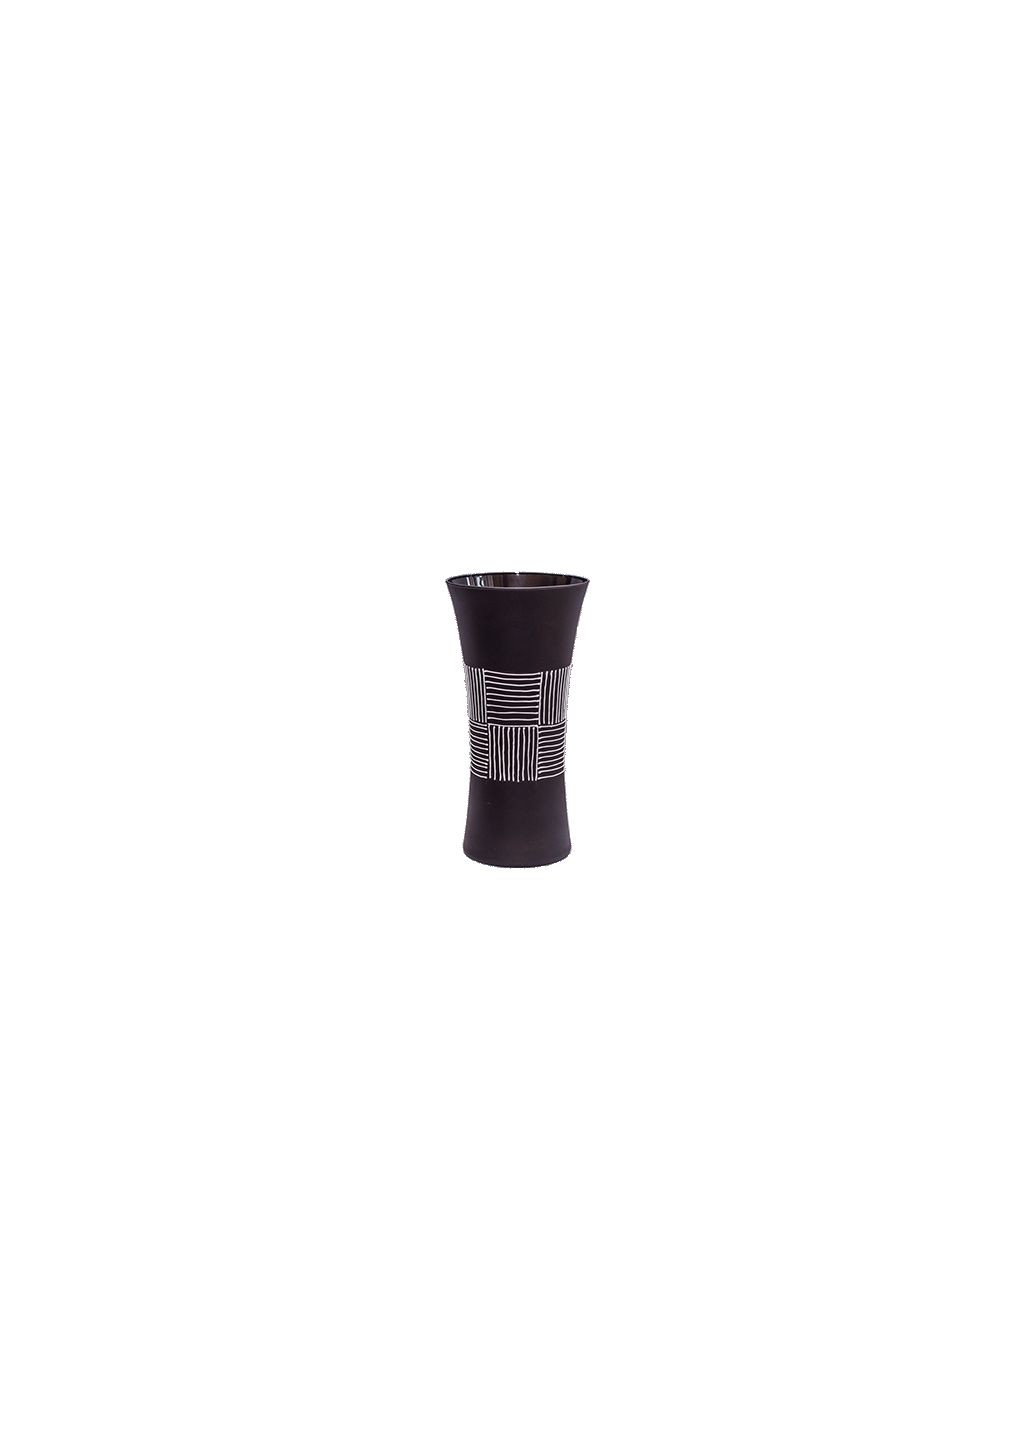 Ваза Доміно чорна 35 см X029/1 domino black GlassStyle (273218008)